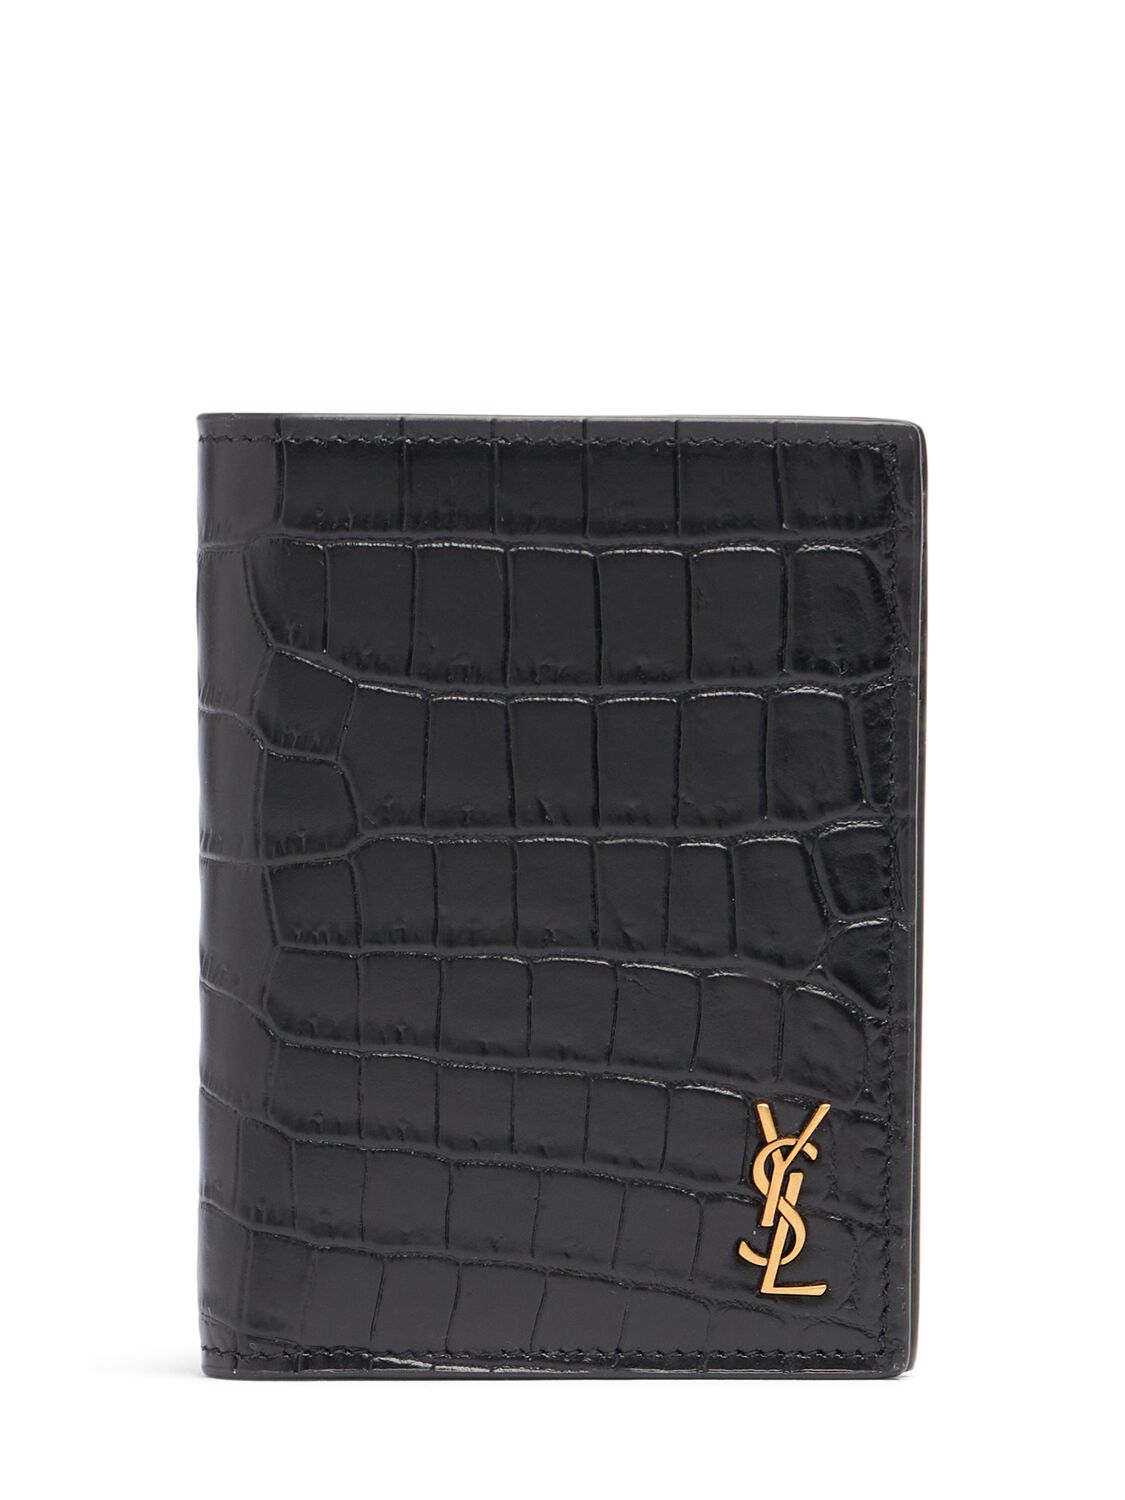 Ysl Leather Wallet - SAINT LAURENT - Modalova